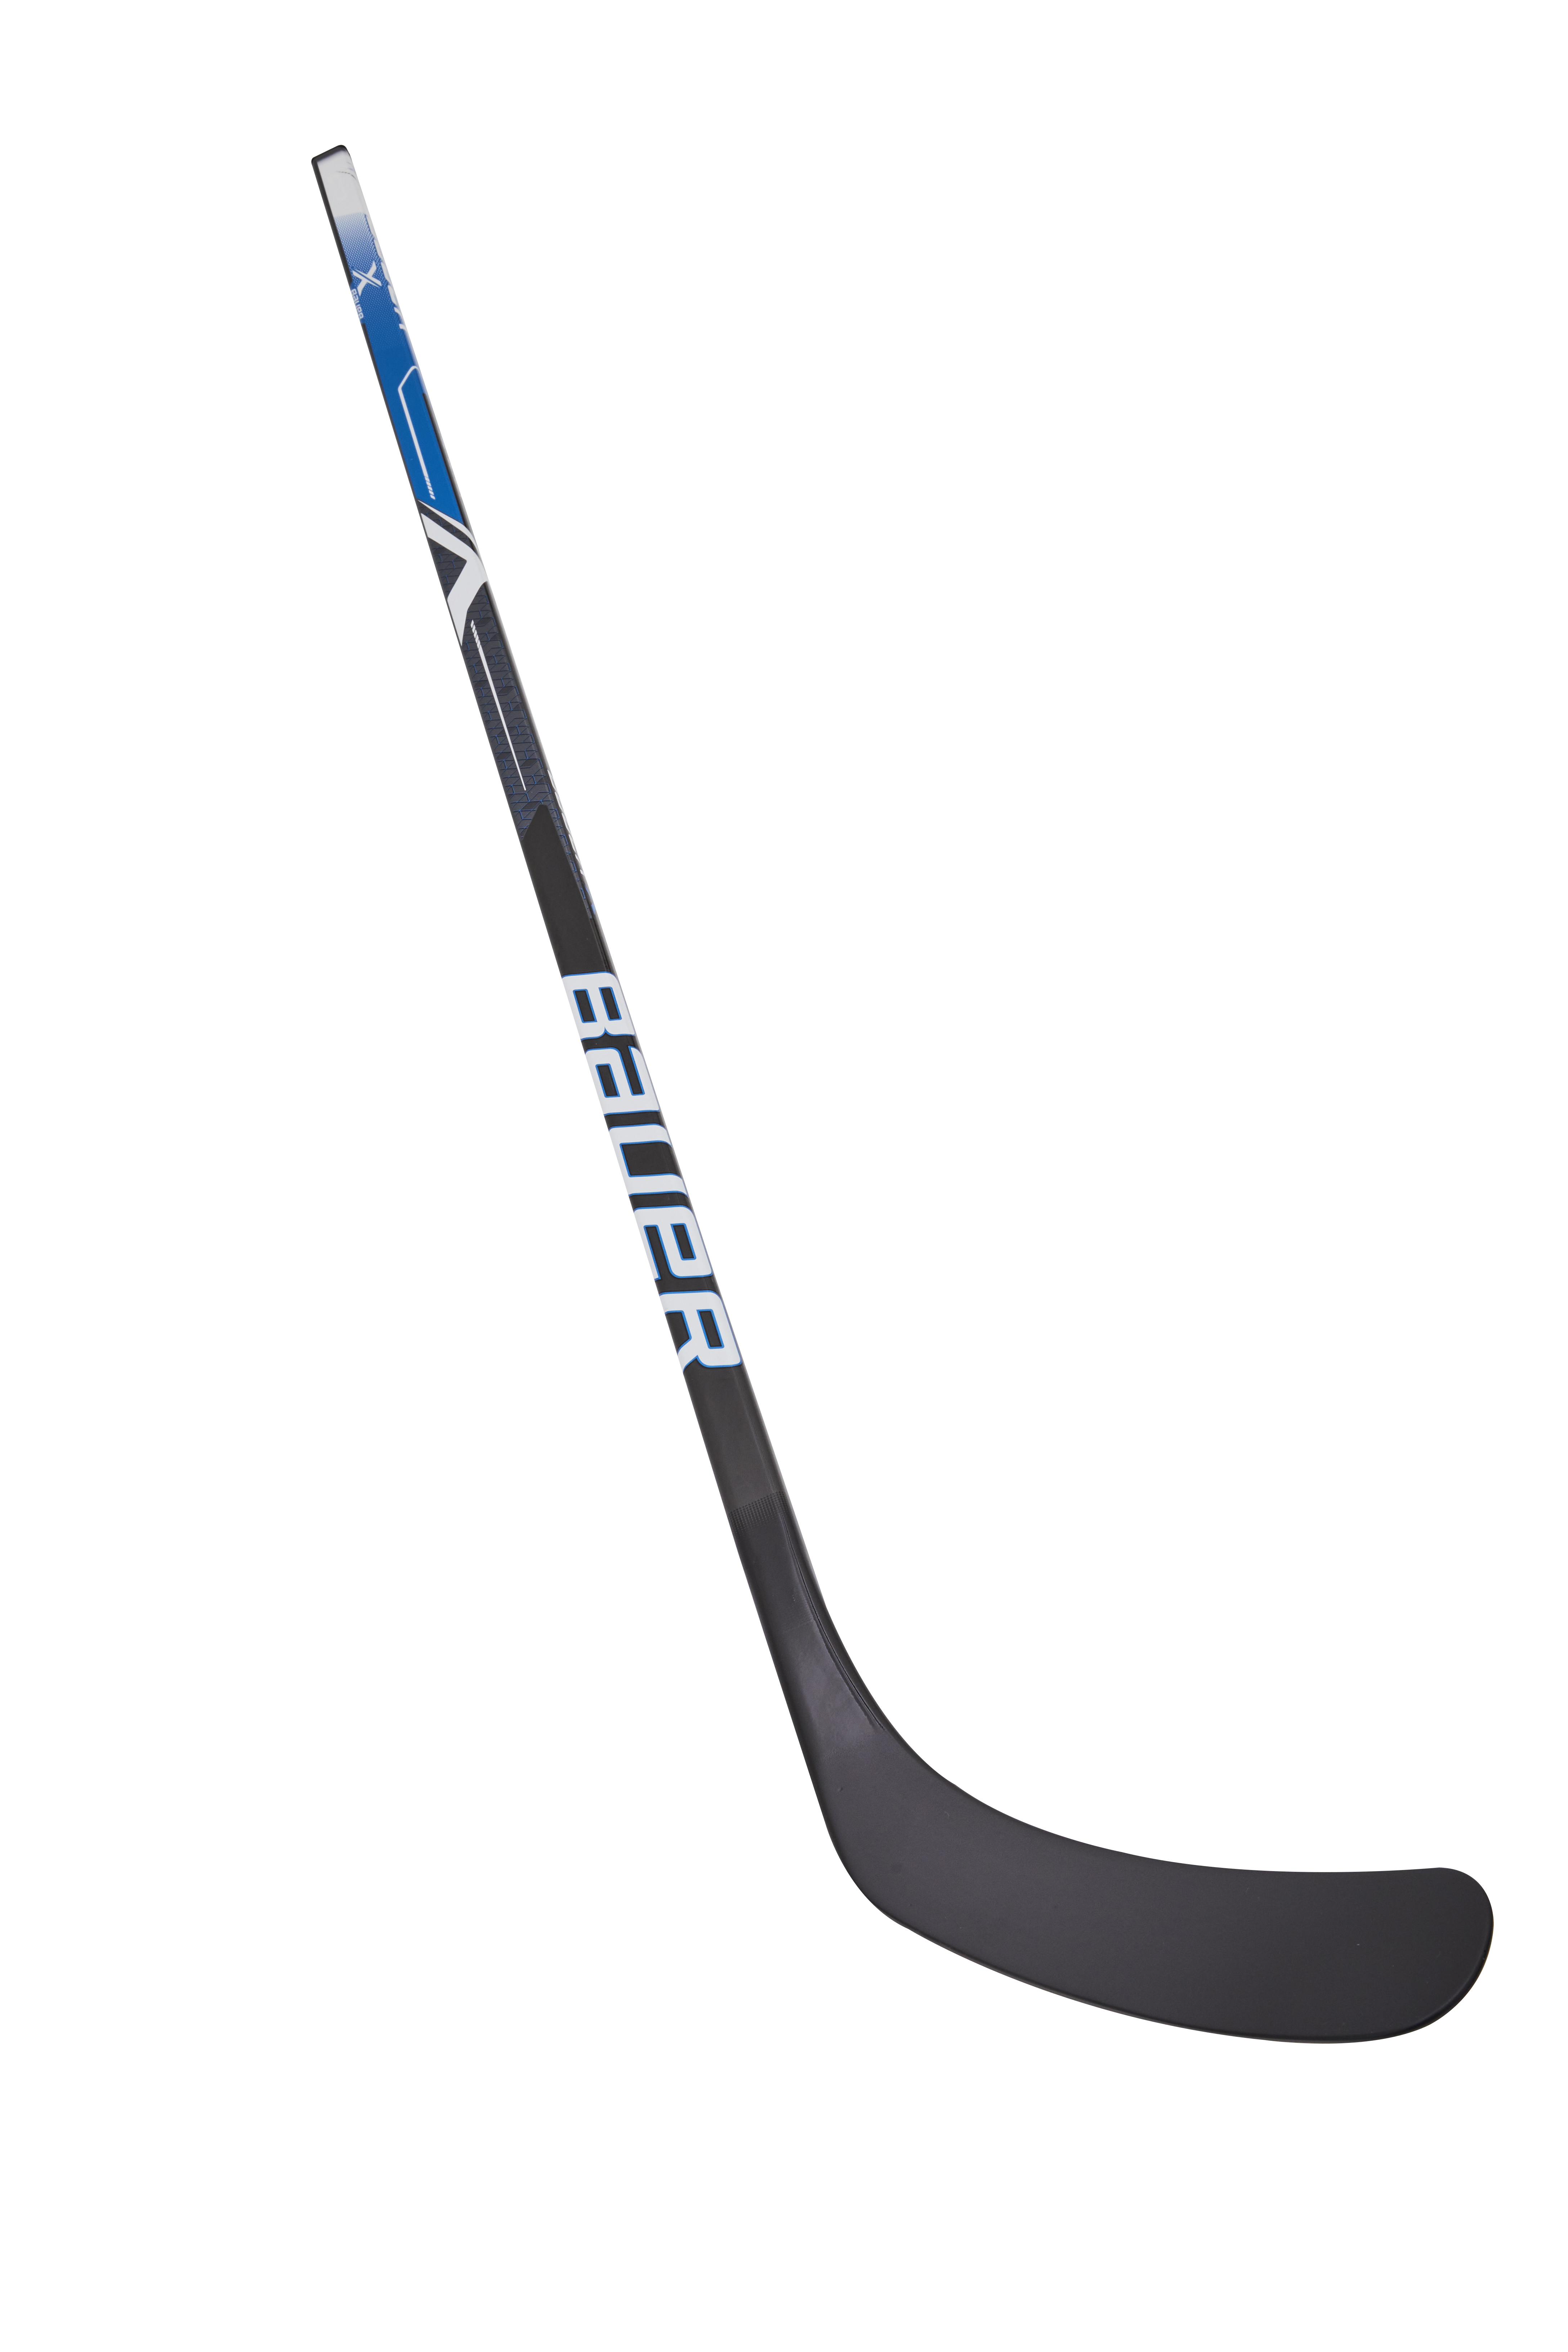 Arab Vochtig Portaal Bauer X ijshockey stick (57") Int · Henrys Sportshop